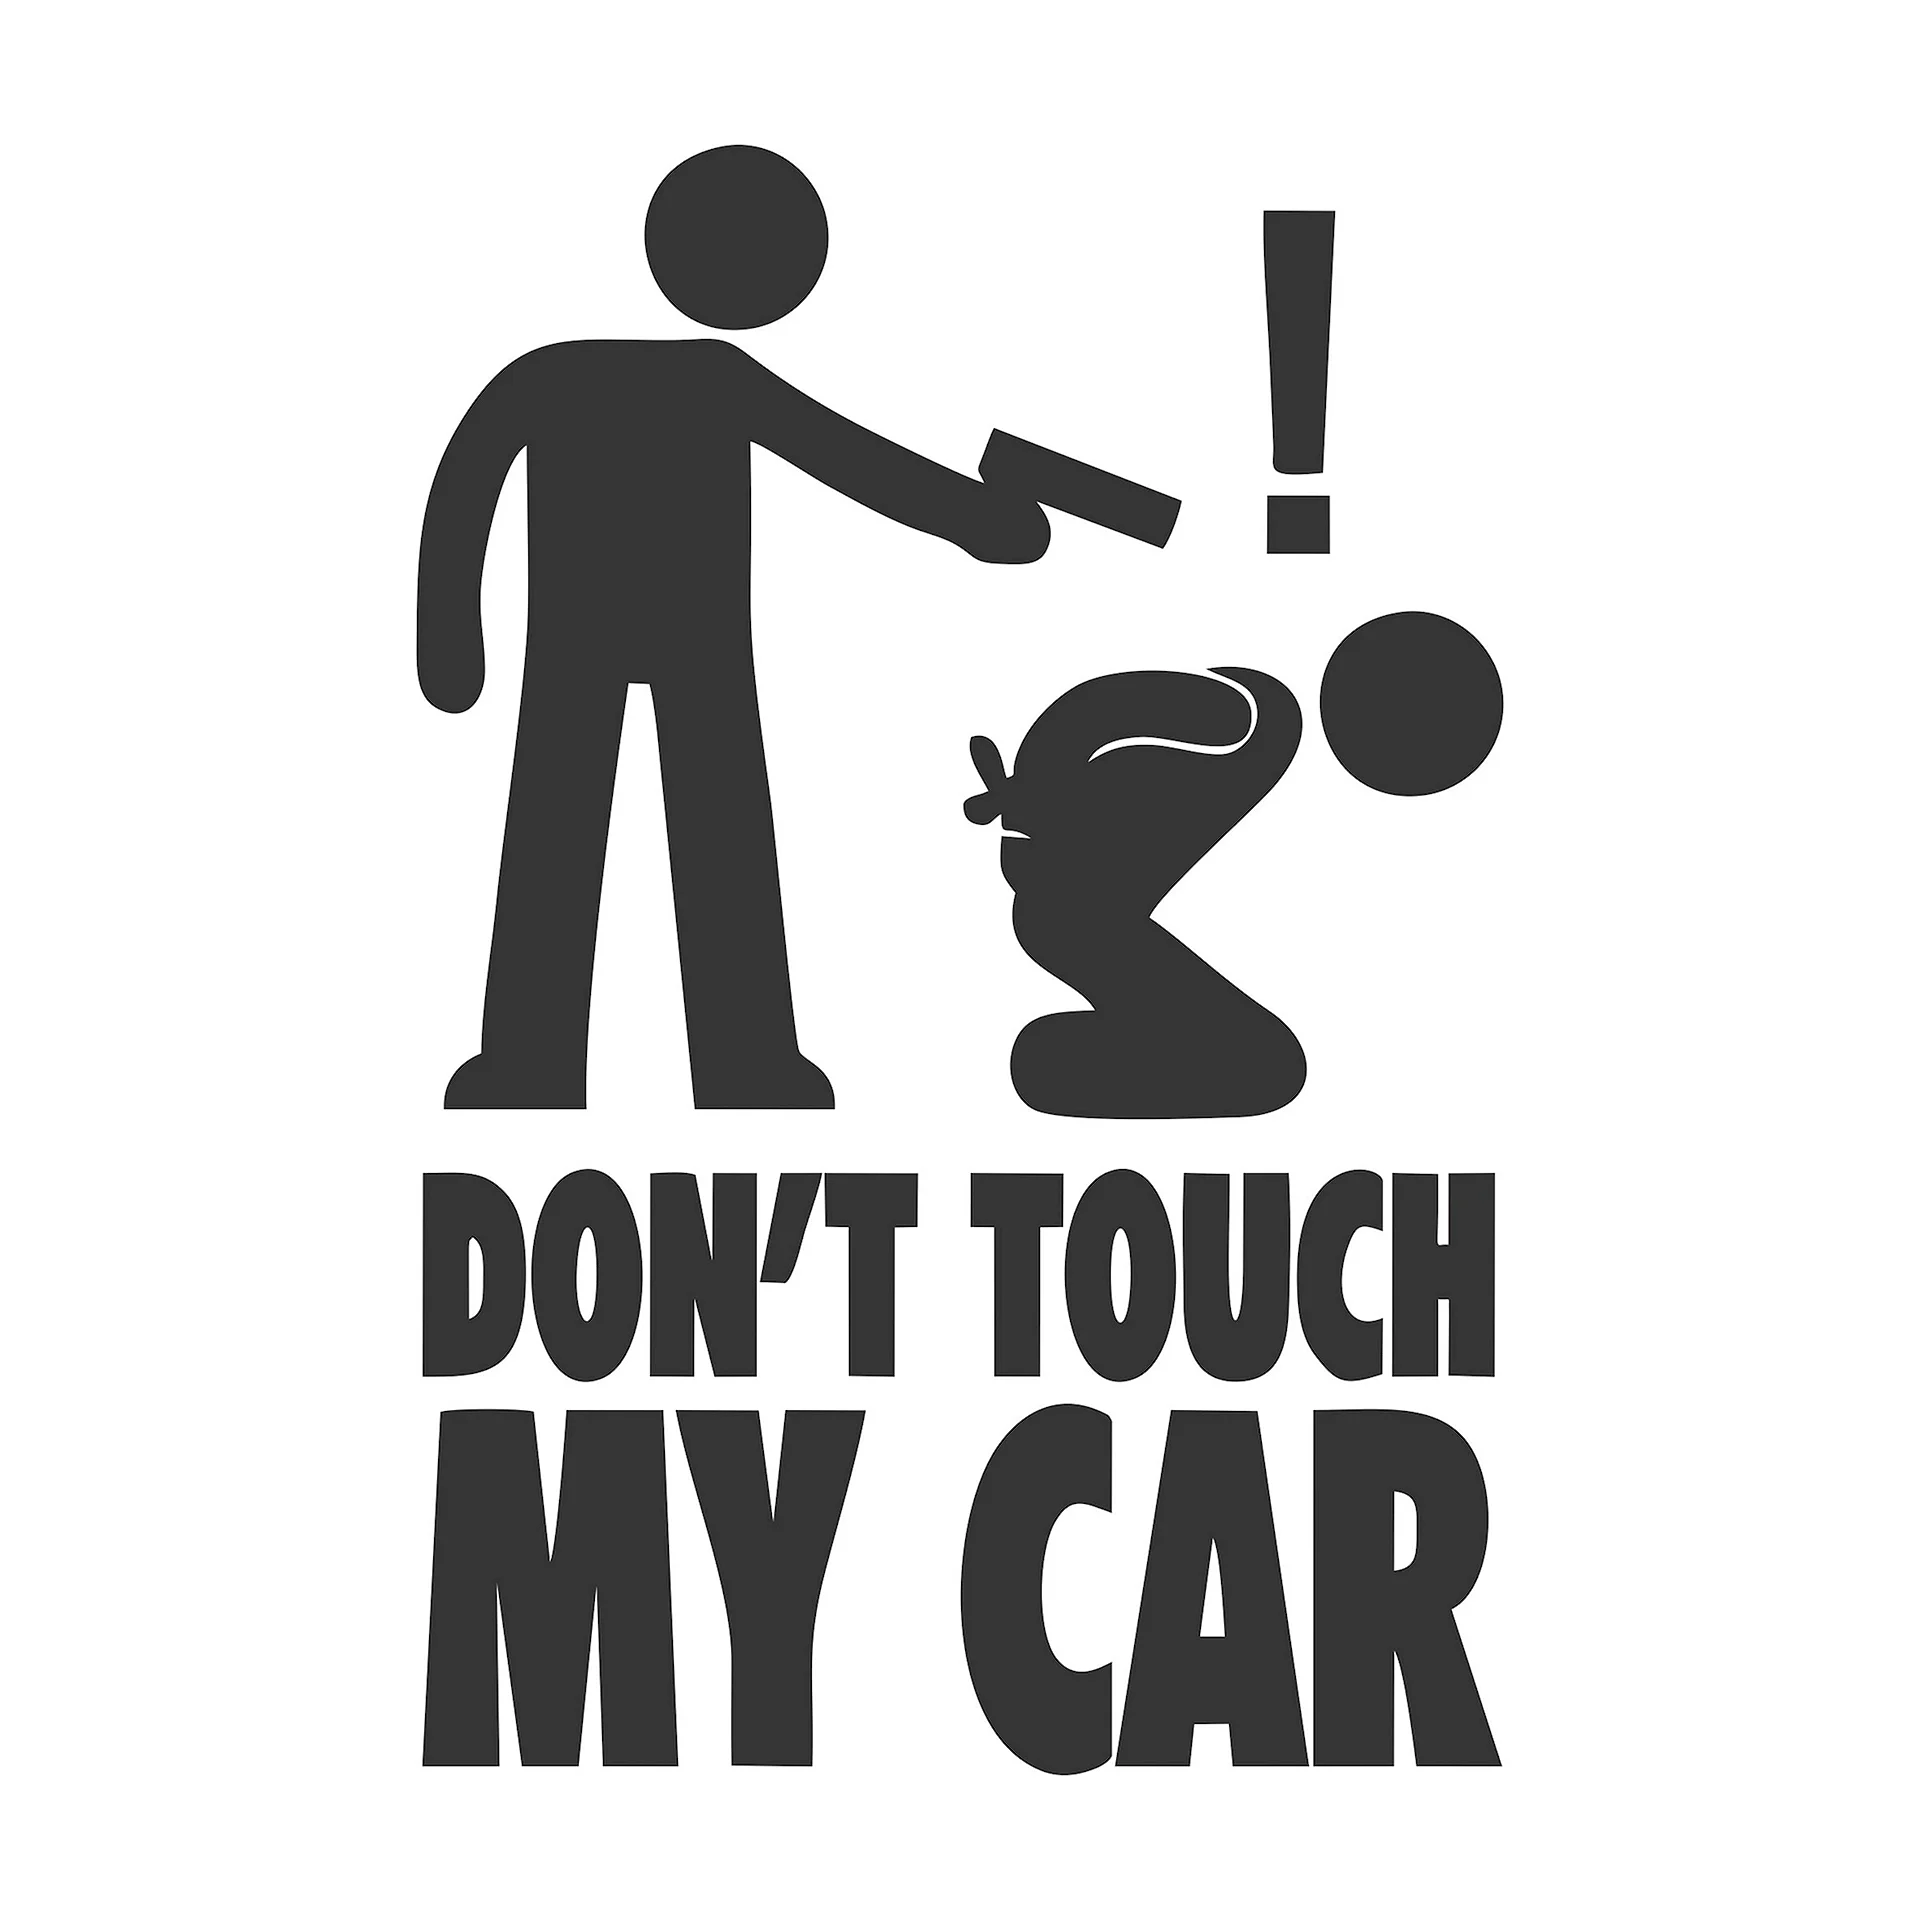 Don t touch 2. Вщте ещгср ьу наклейка. Don`t Touch. Наклейка don't Touch. Наклейка don't Touch me.